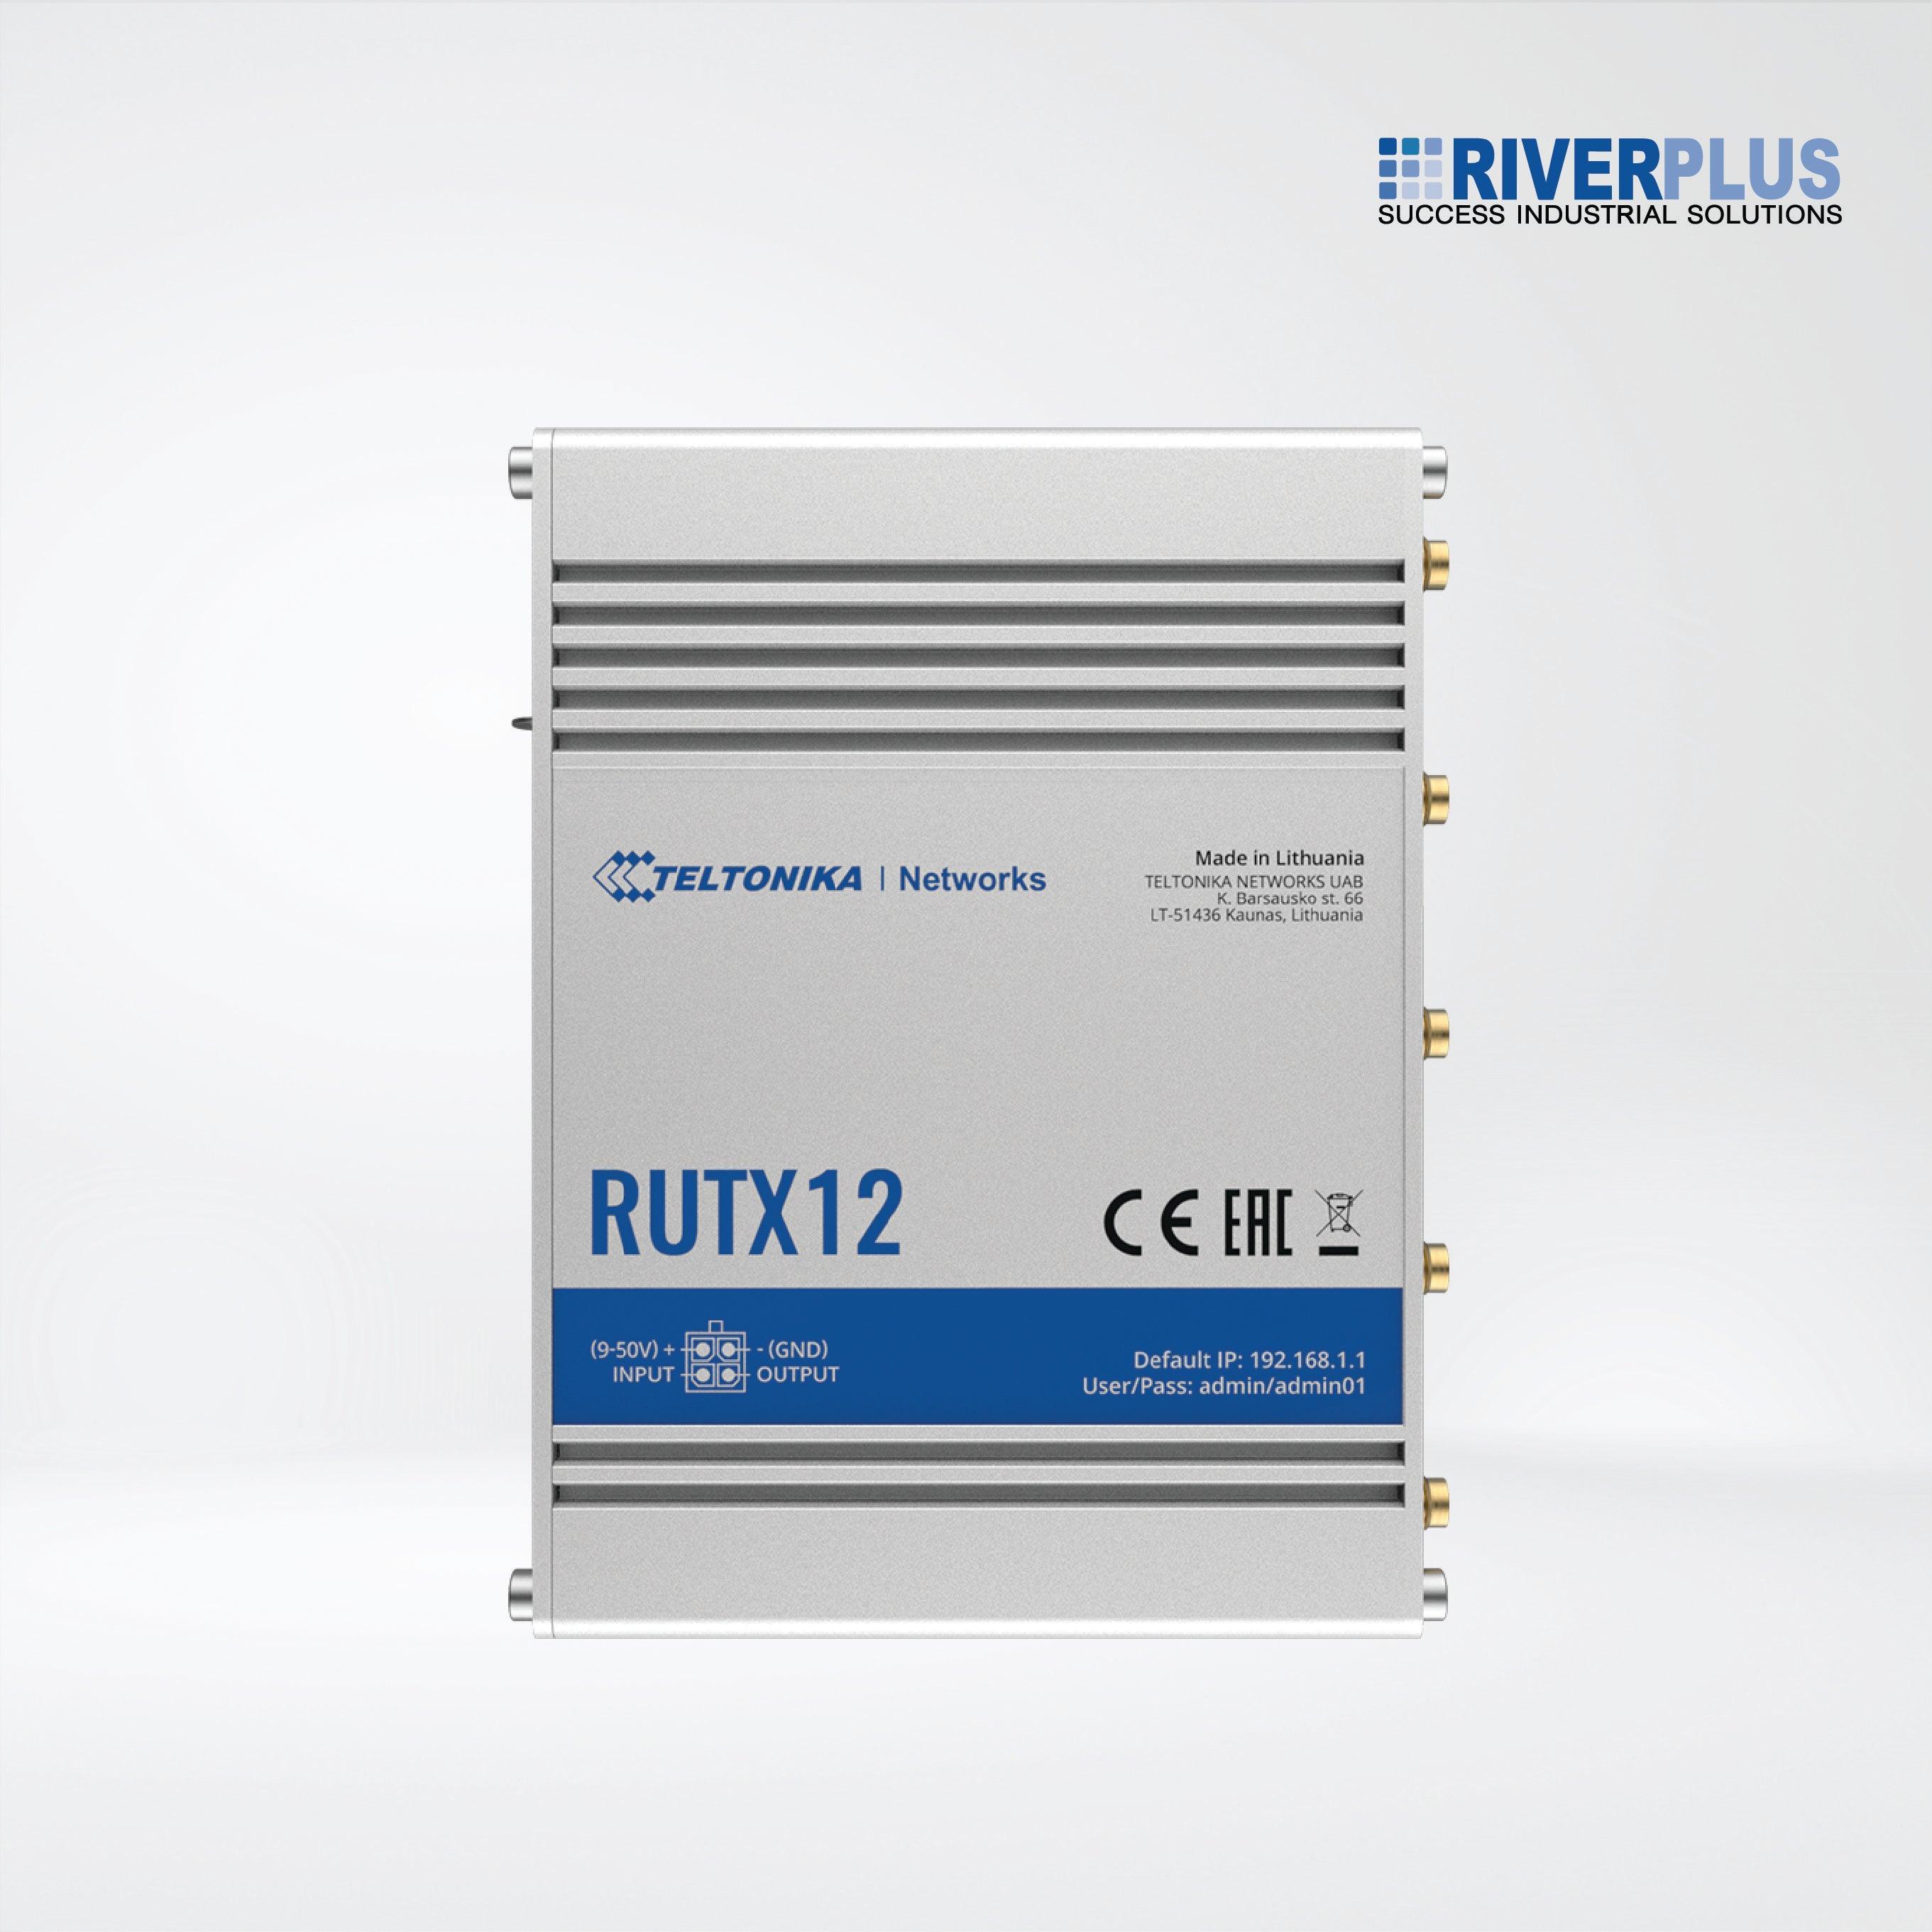 RUTX12 Dual LTE CAT 6 Industrial Cellular Router - Riverplus